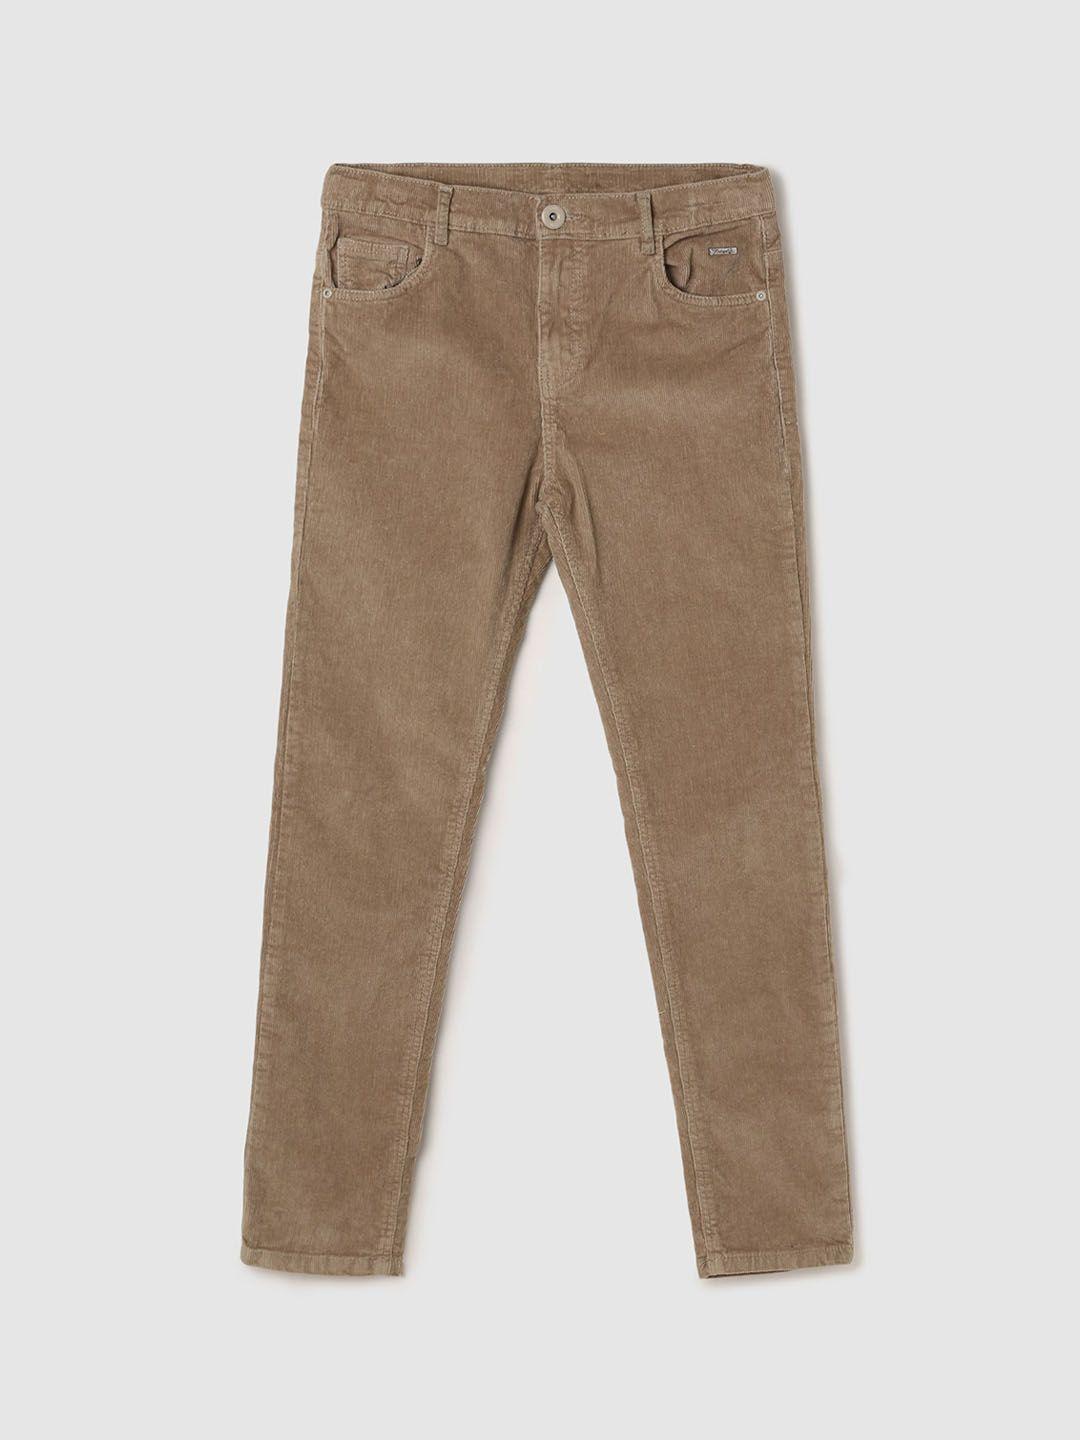 max-boys-mid-rise-regular-trousers